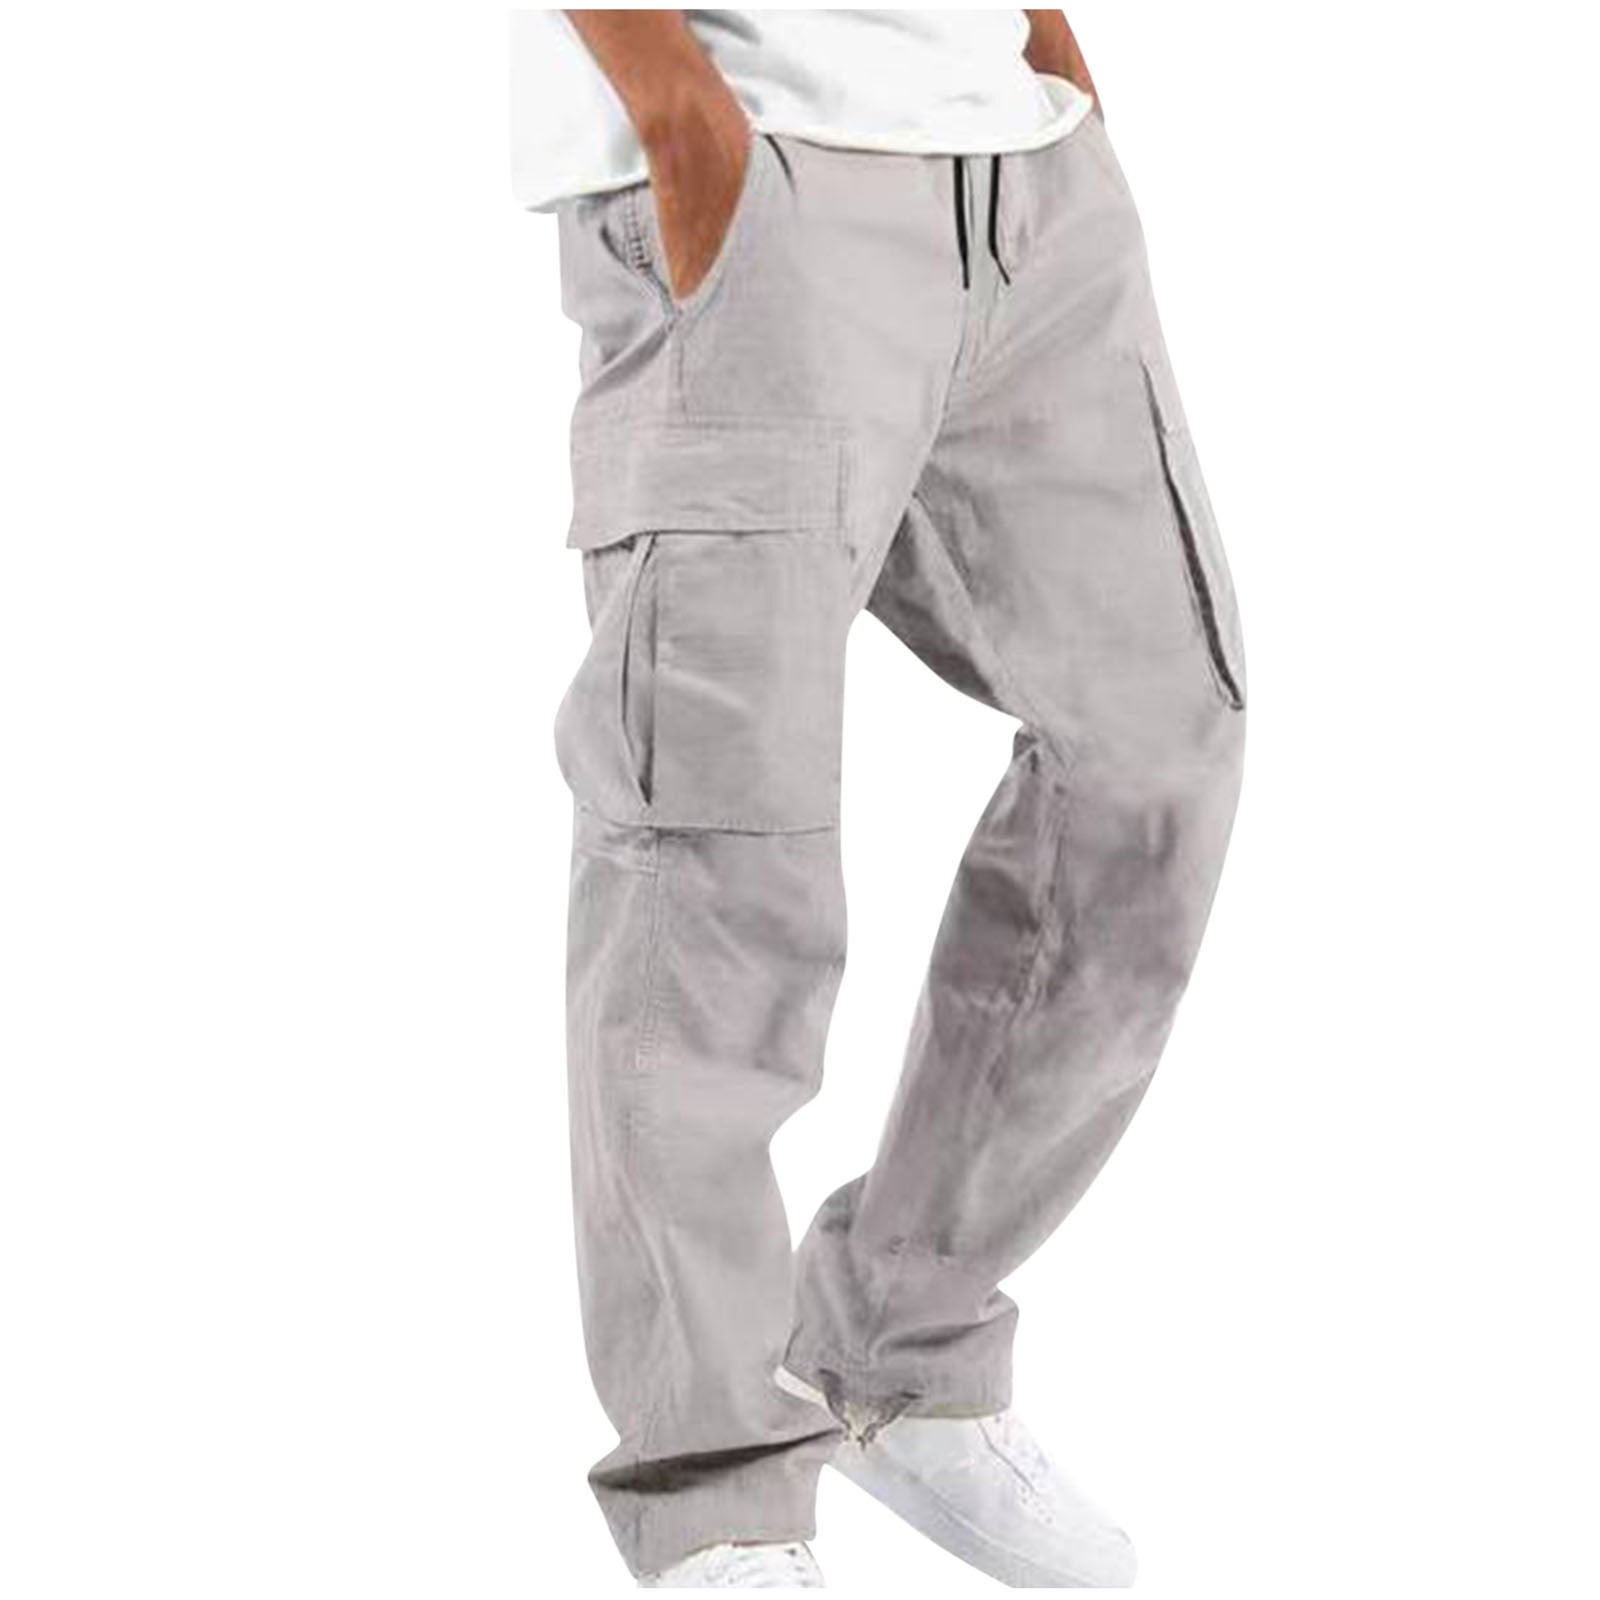 Simplmasygenix Clearance Men's Pants Trousers Men Solid Casual